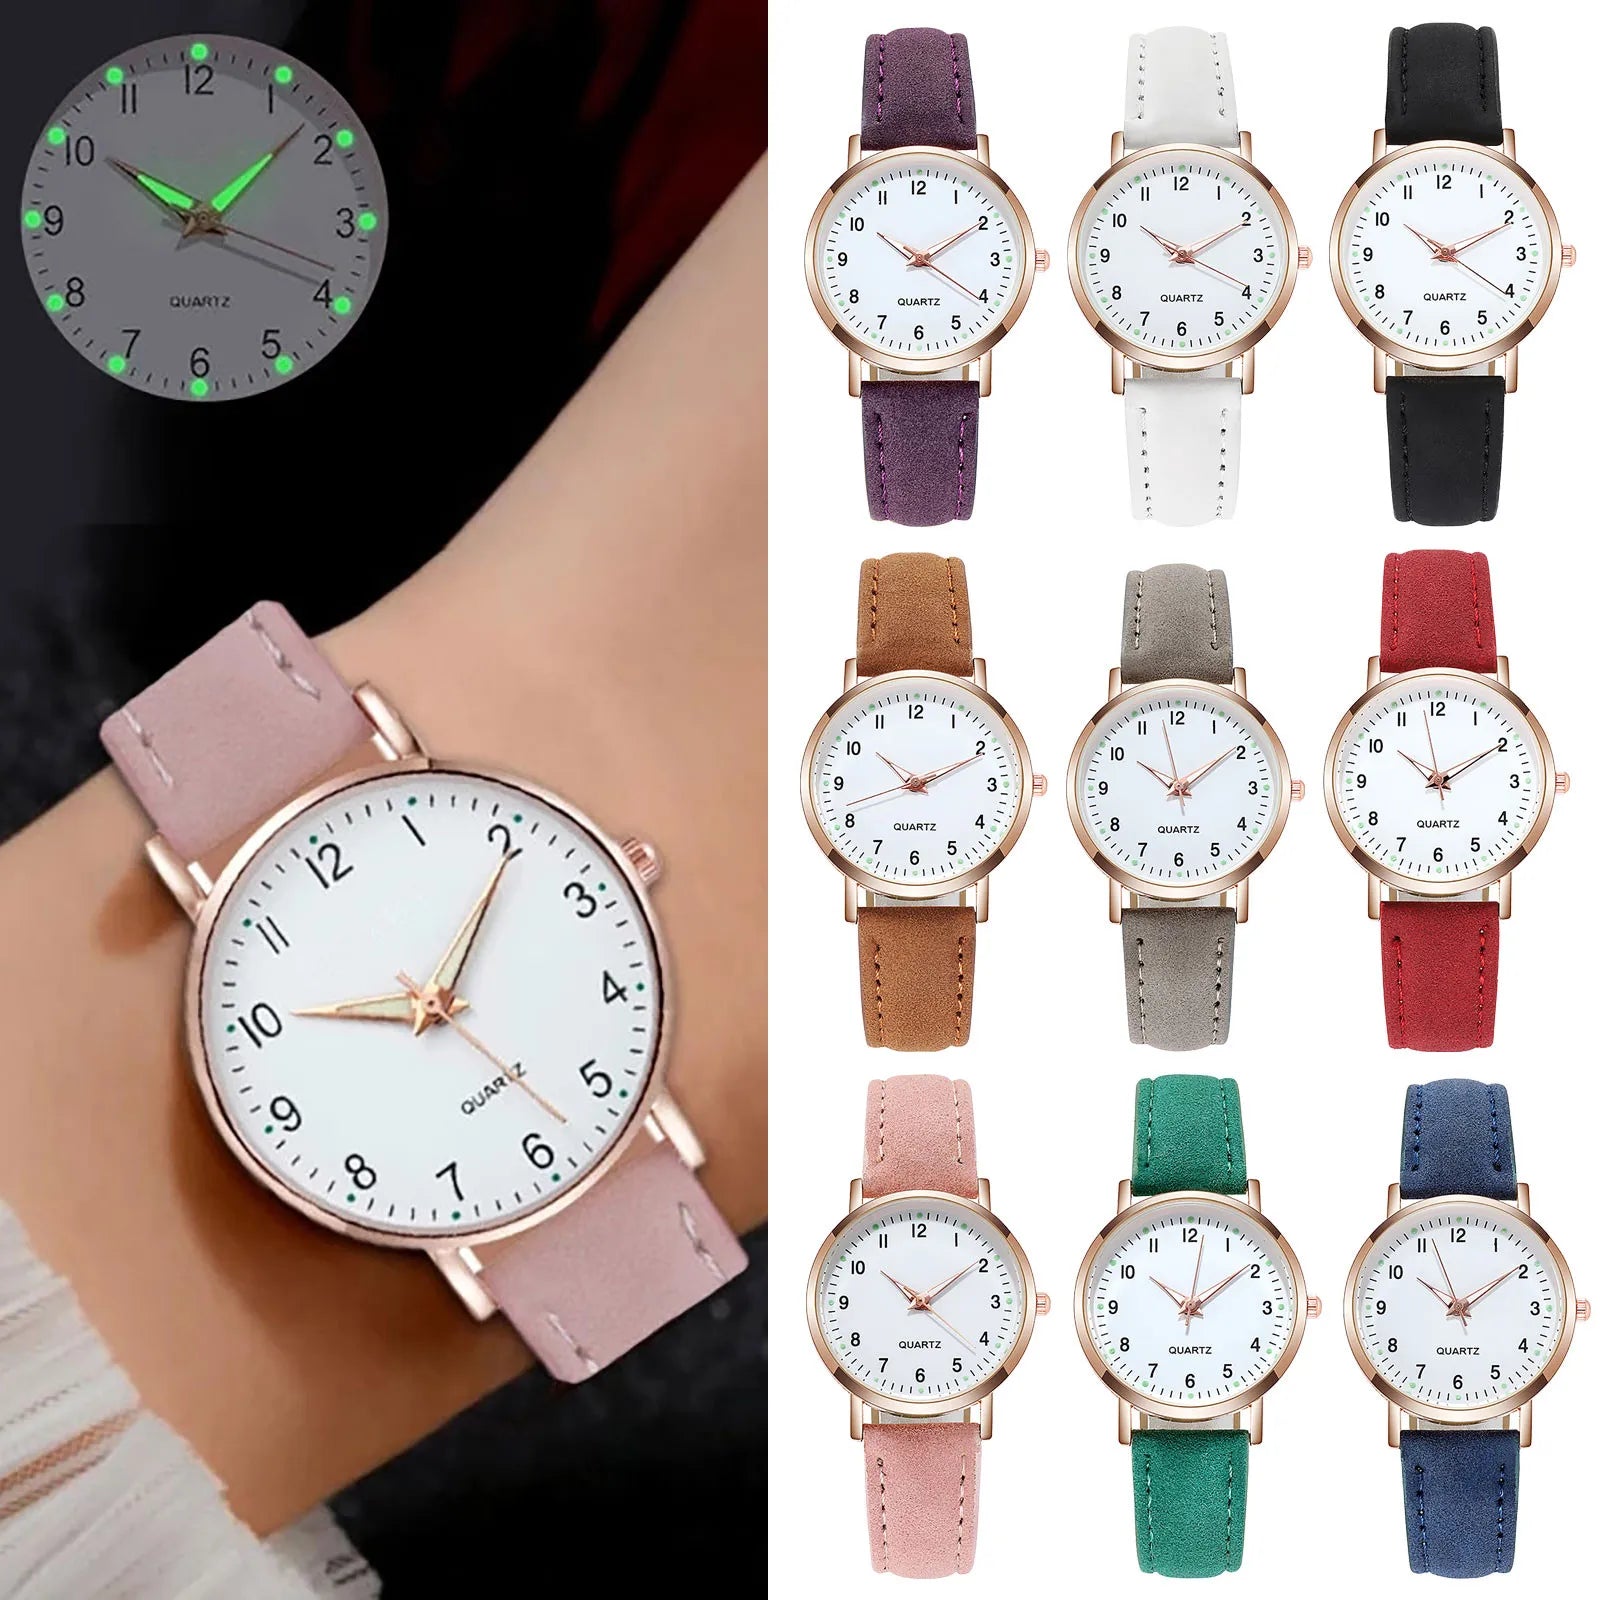 Fashion Leather Belt Watch: Stylish Ladies' Quartz Wristwatch - Trendy Timepiece for Women's Fashion